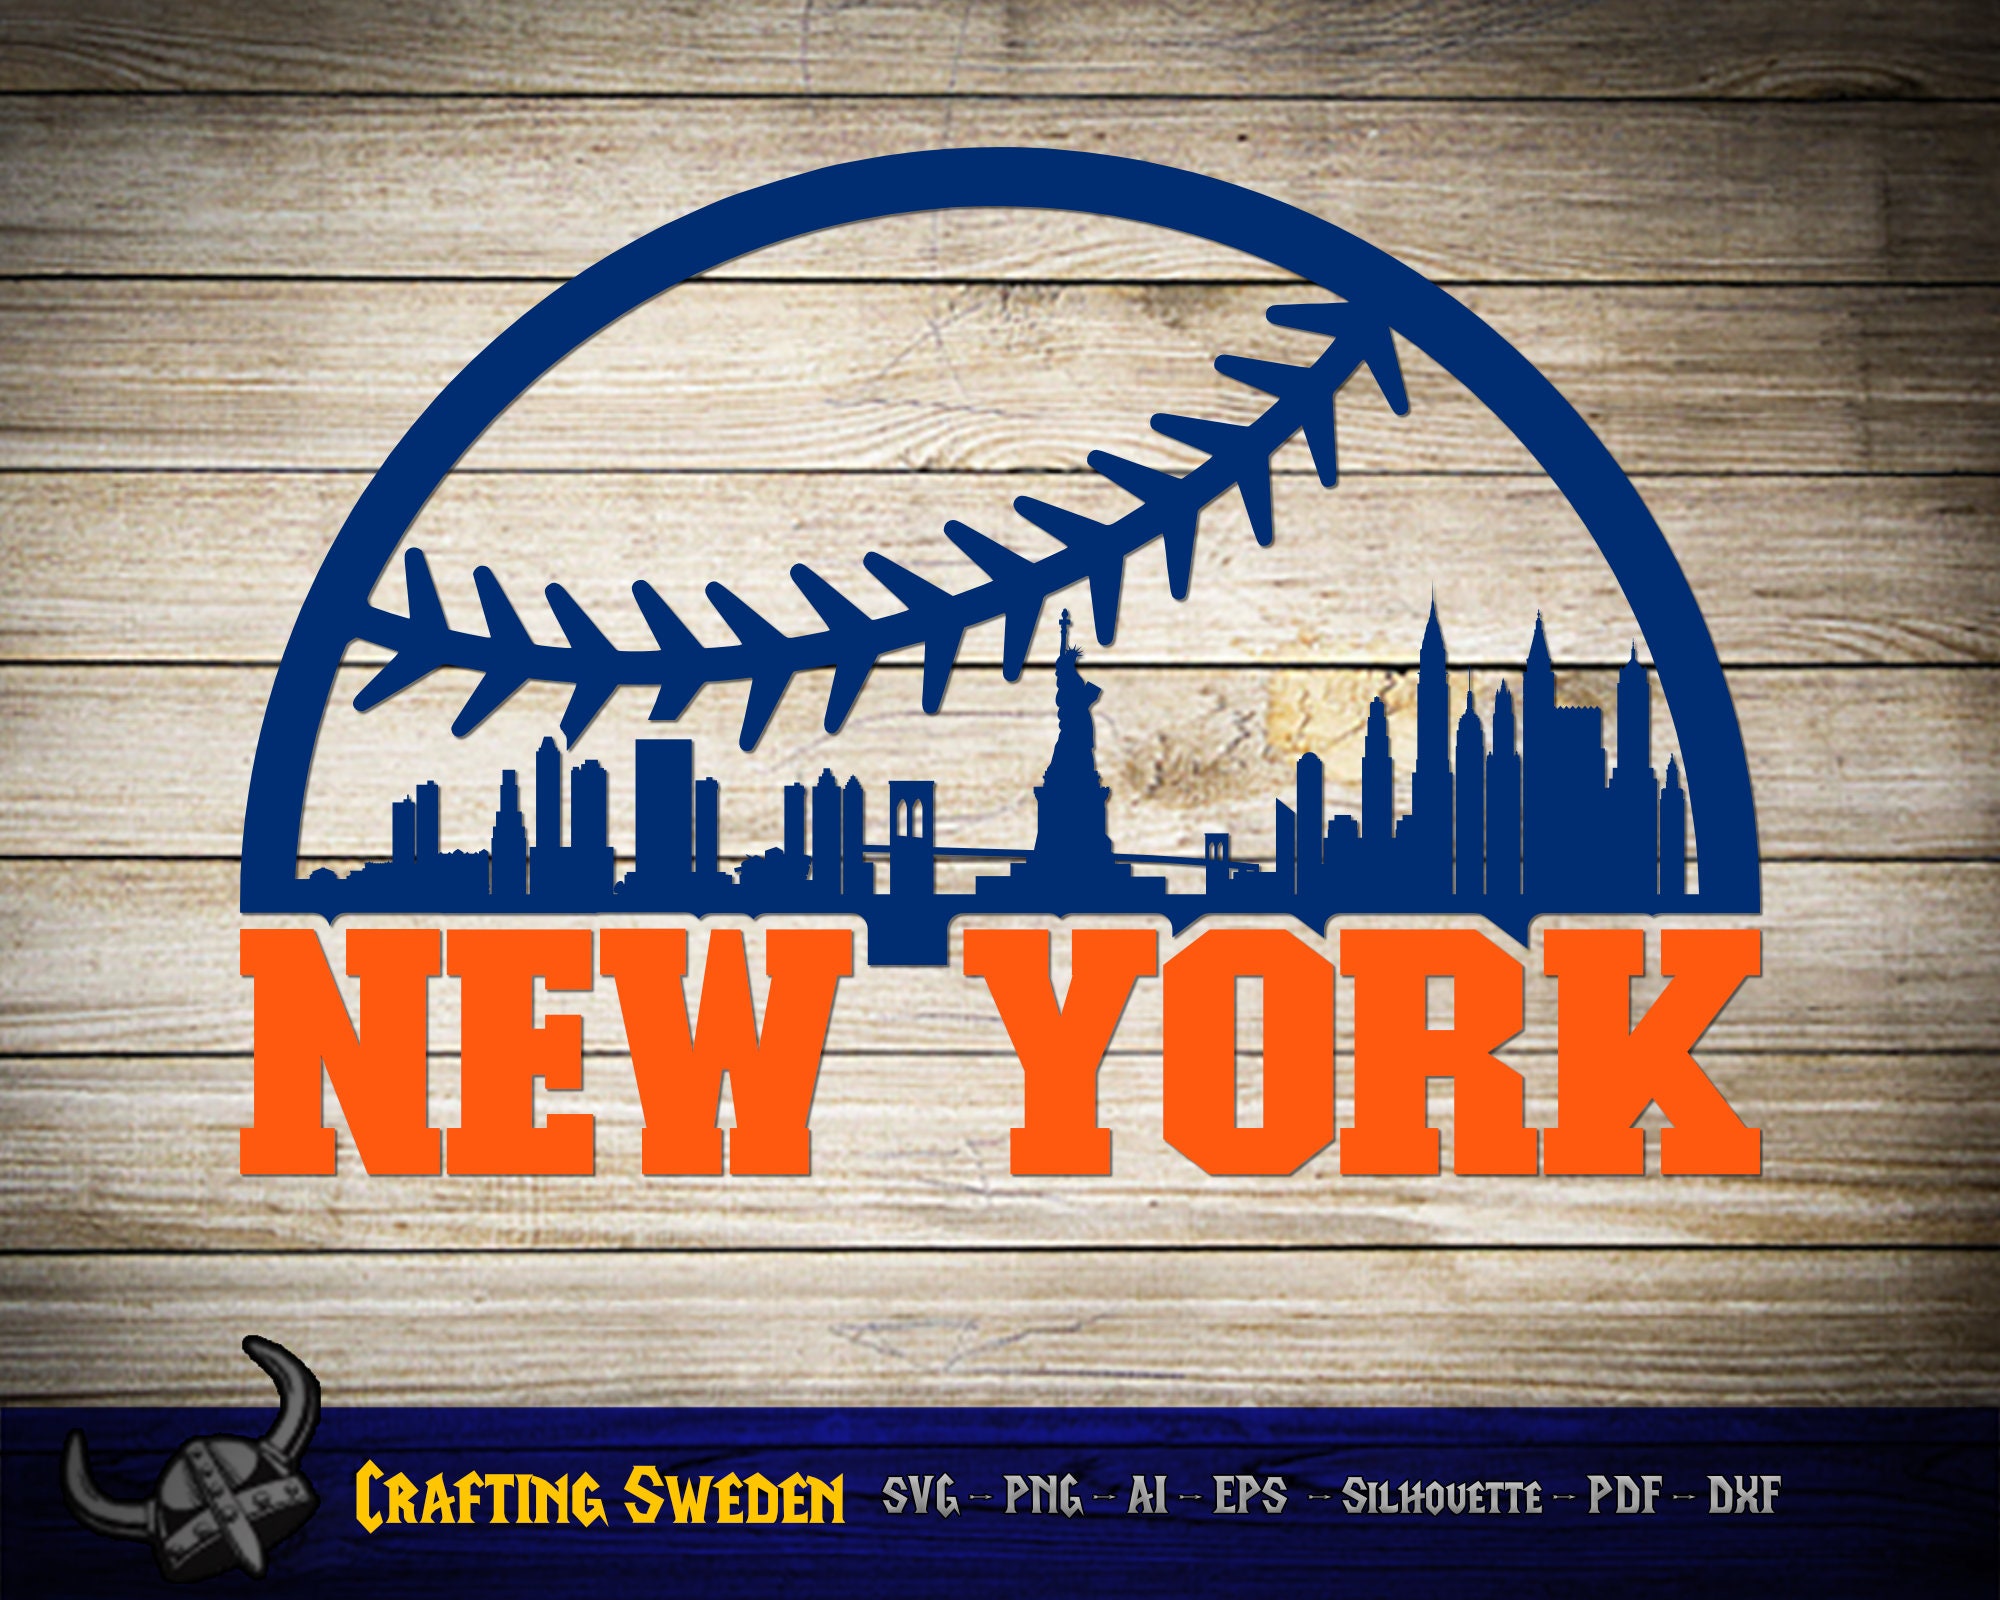 New York Yankees Logo PNG Transparent & SVG Vector - Freebie Supply